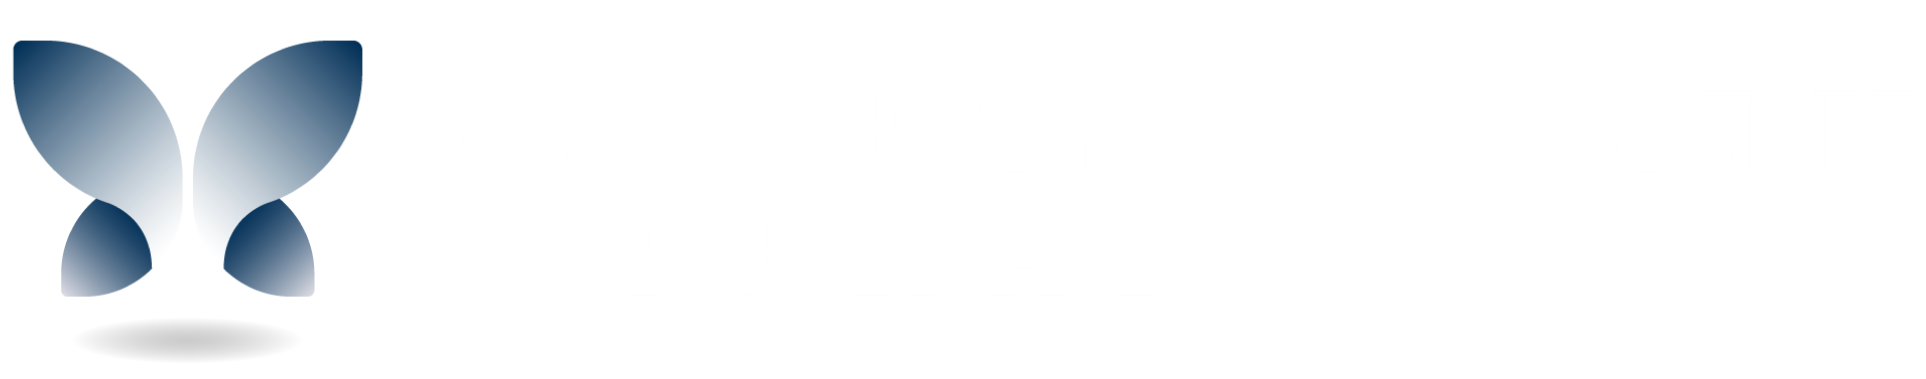 Prosper Health & Rehab Logo